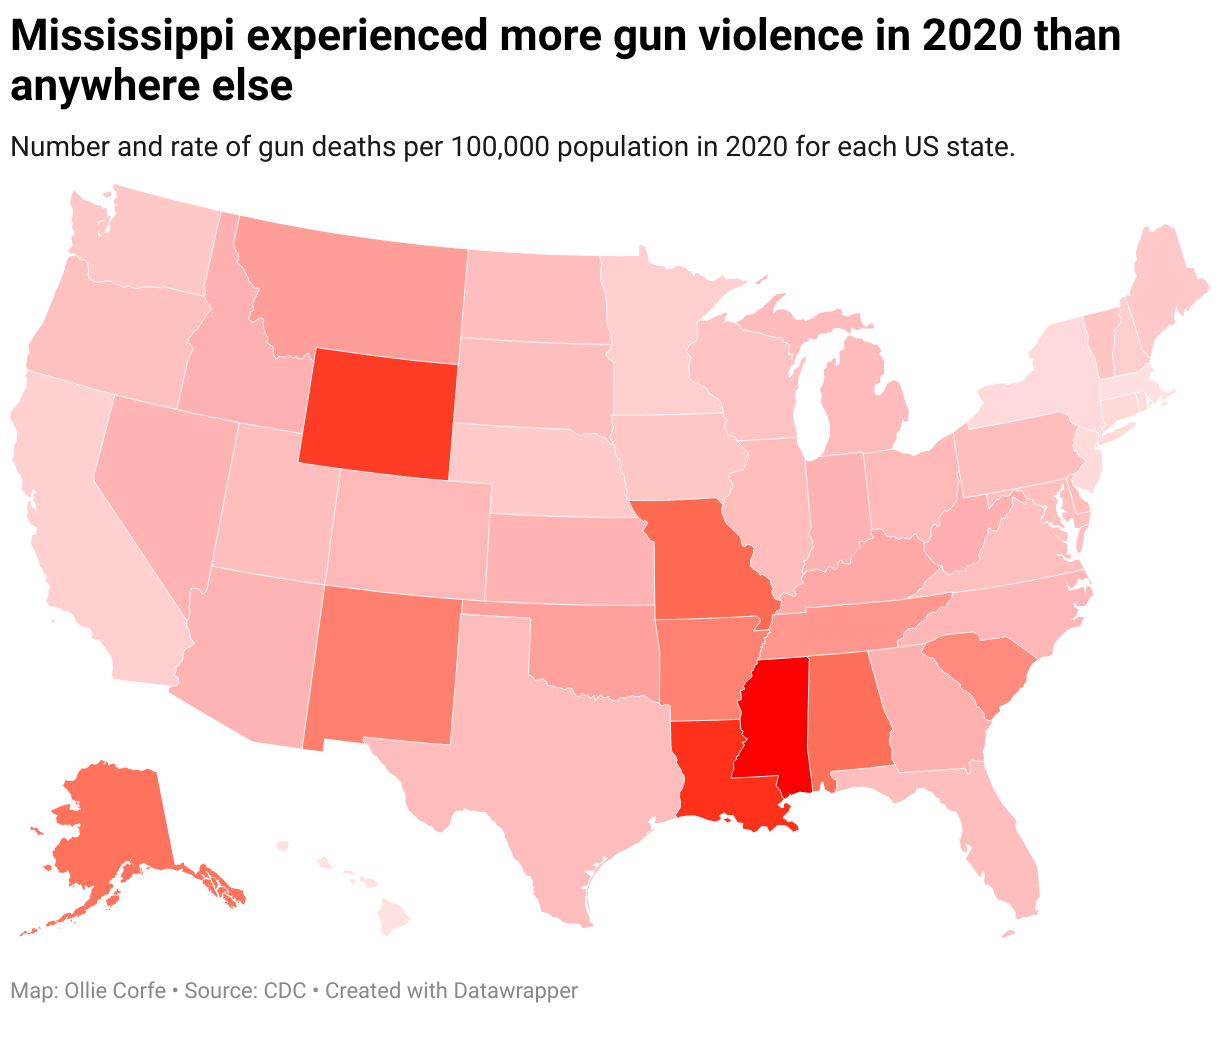 Map of US gun violence rates.